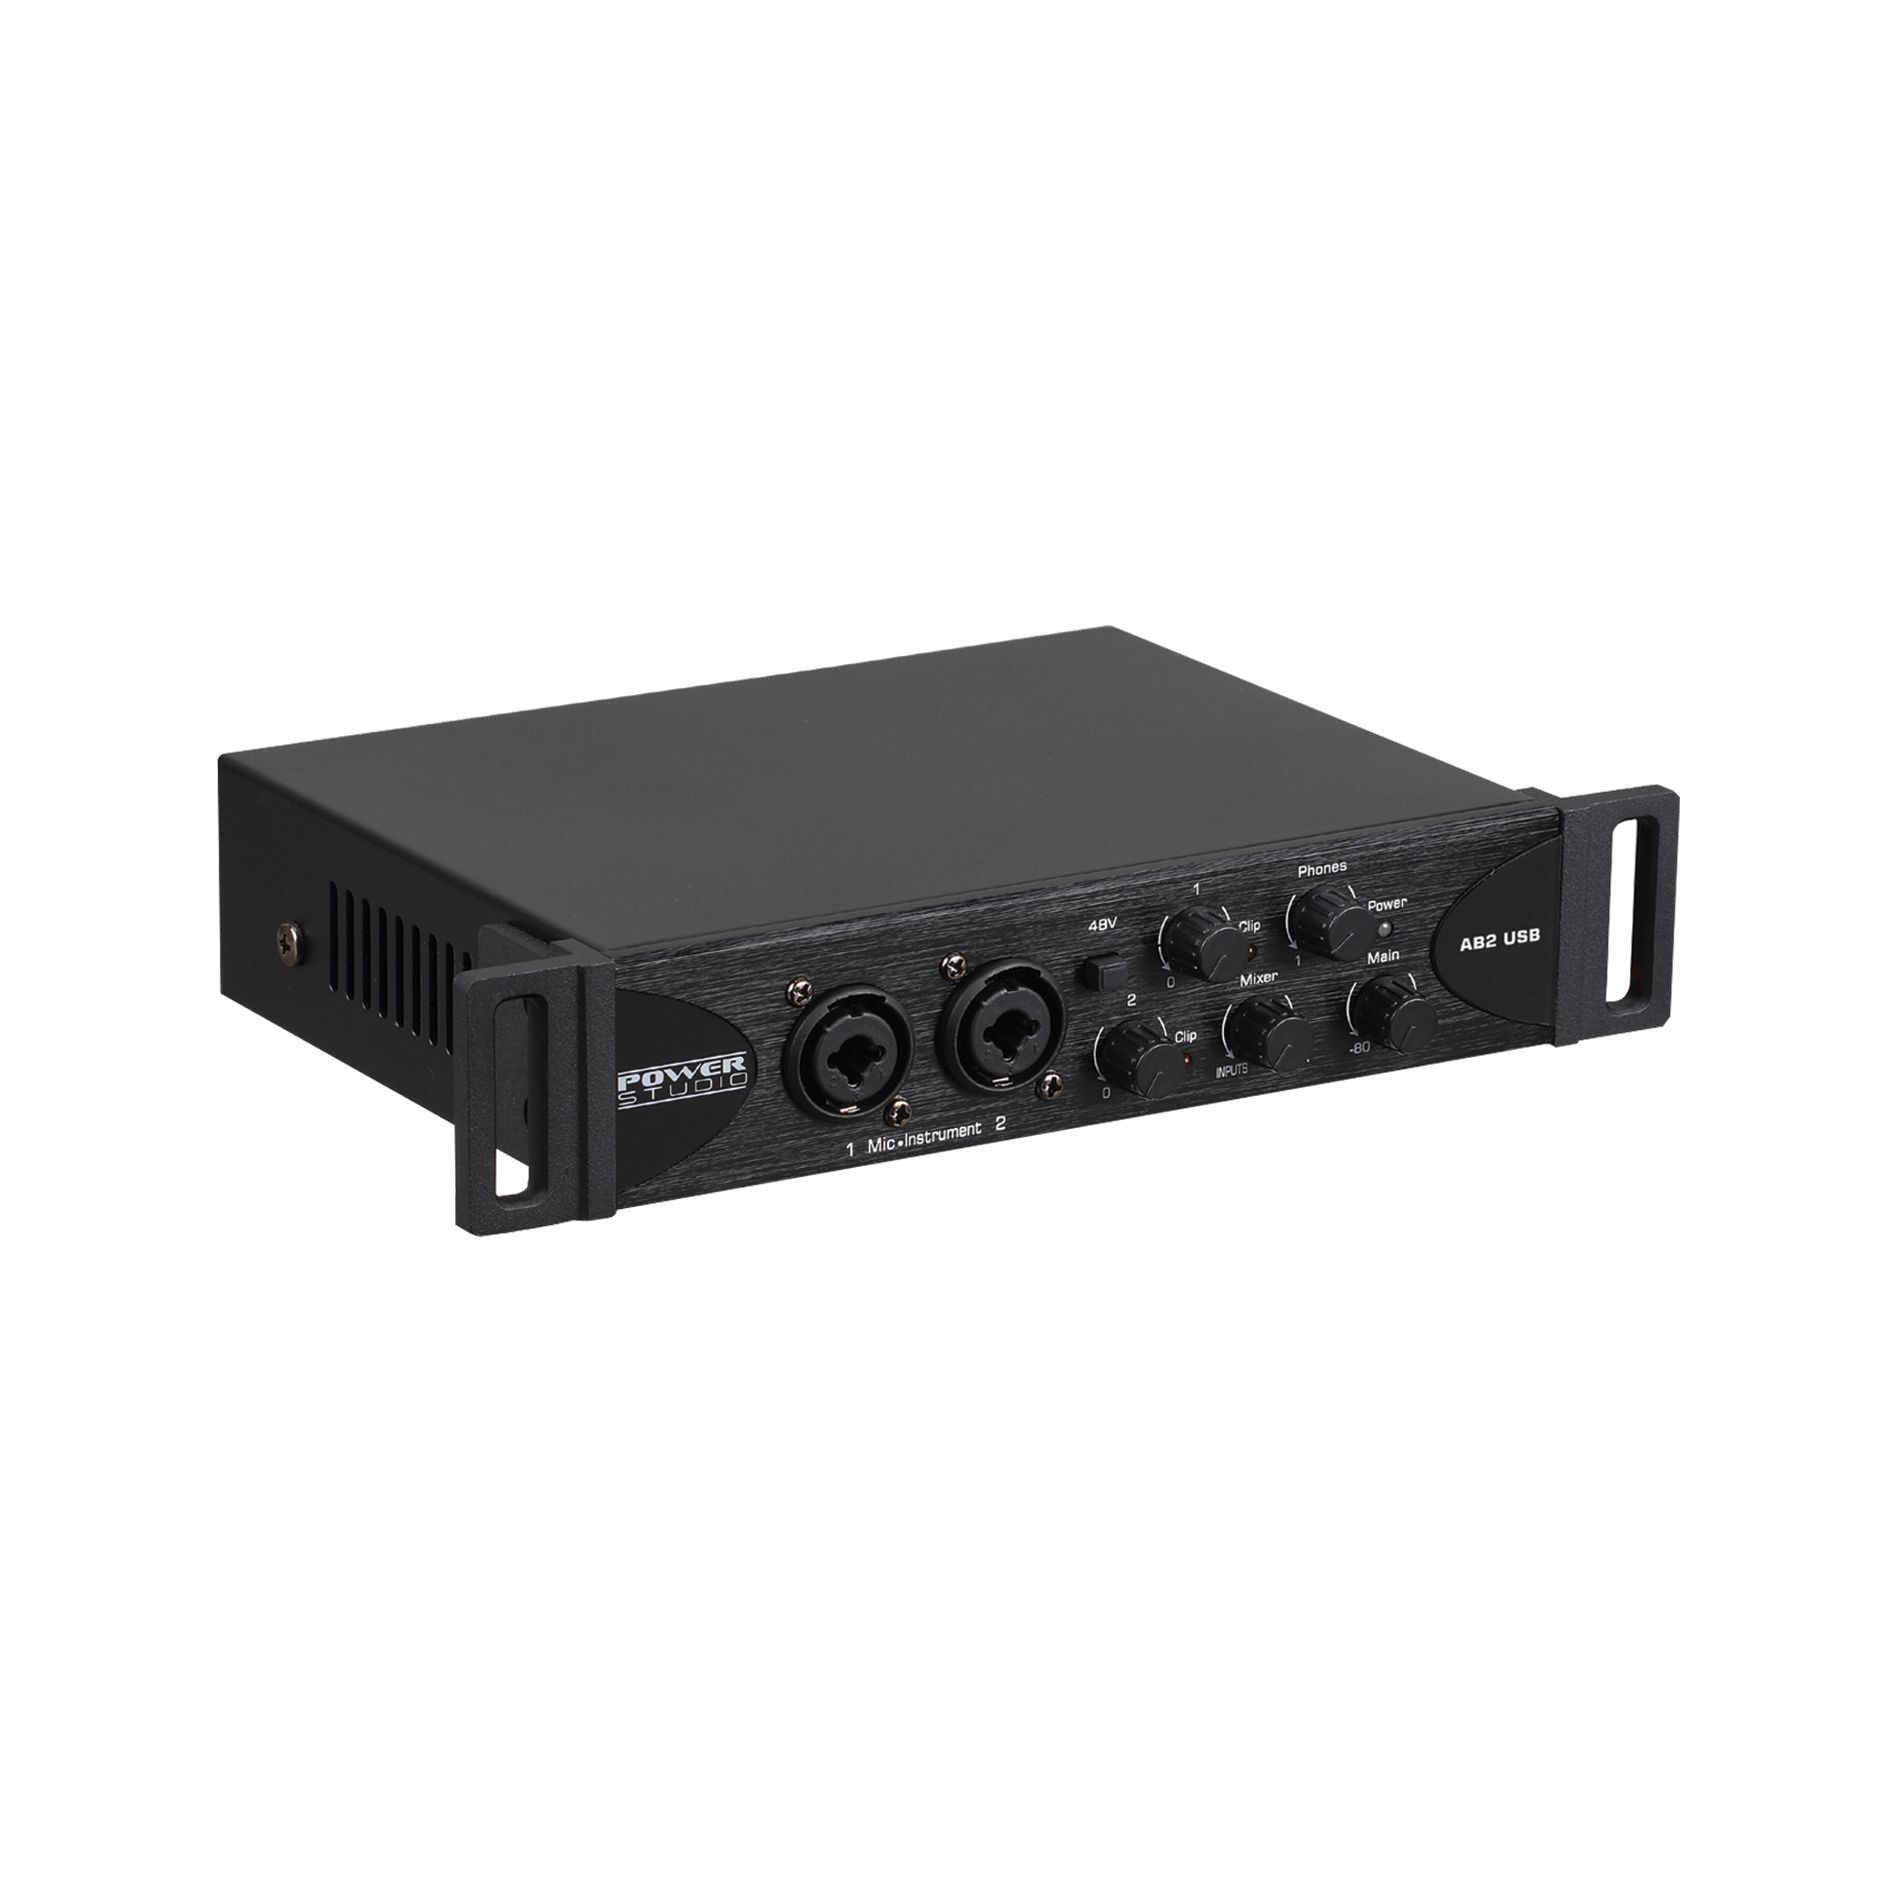 Power Studio Ab2 Usb - Interface de audio USB - Variation 2